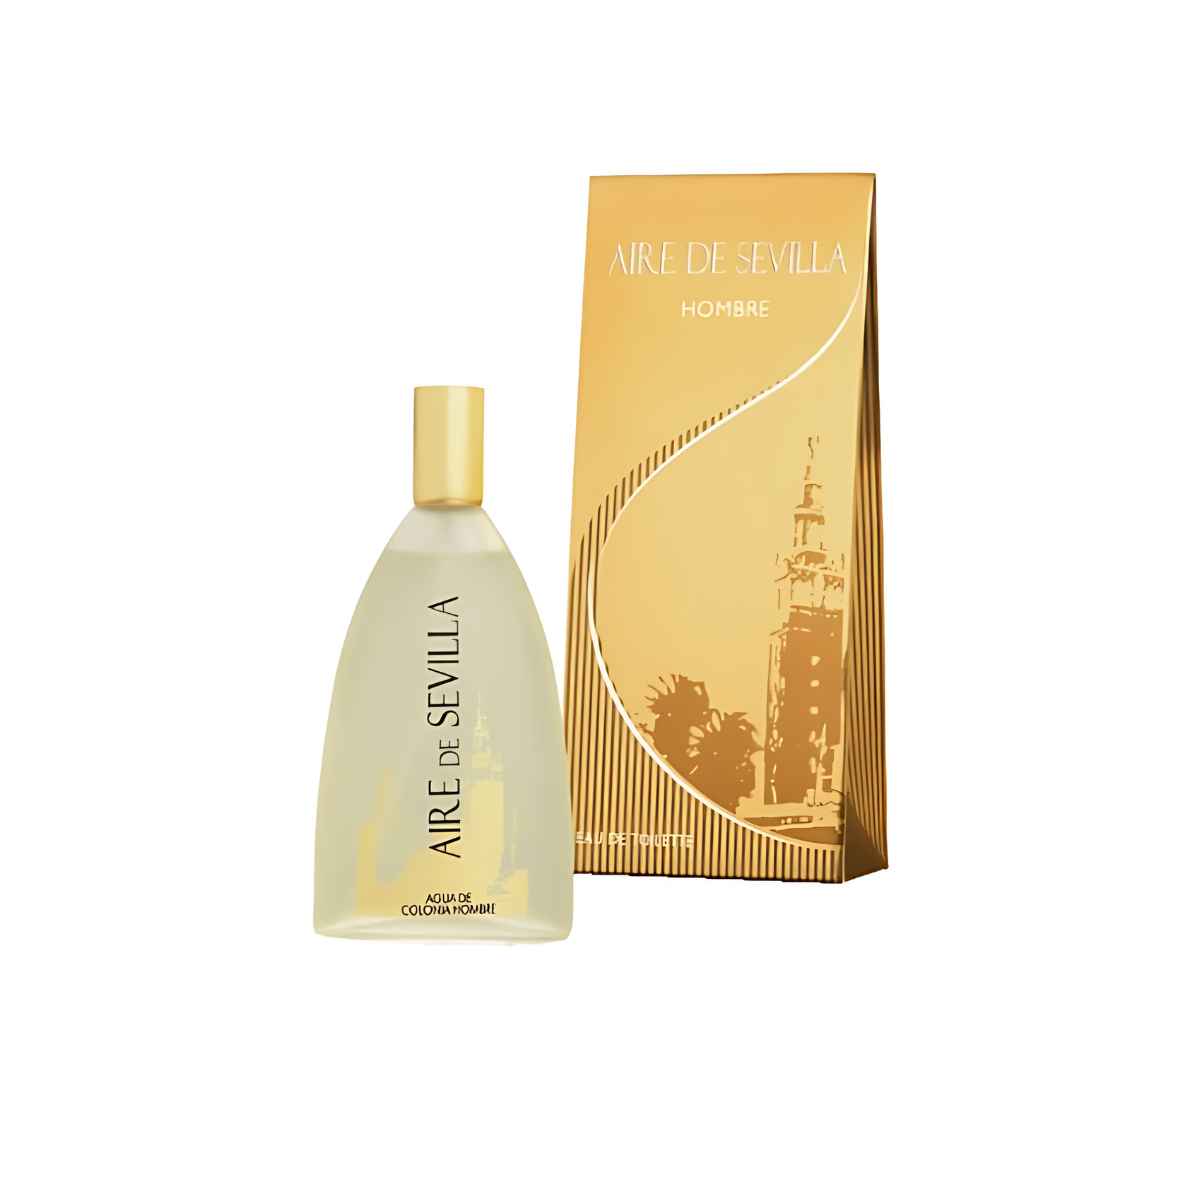 Perfume Aire de Sevilla for Men 150 ml